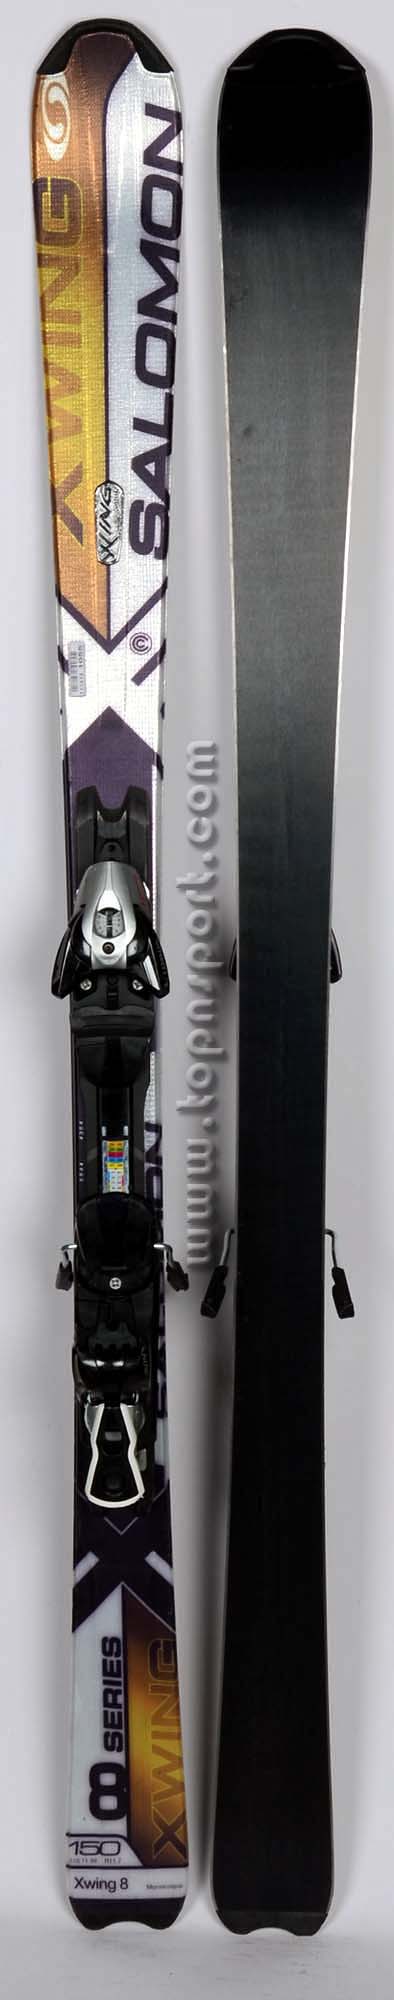 Salomon X-wing 8 series - skis d'occasion